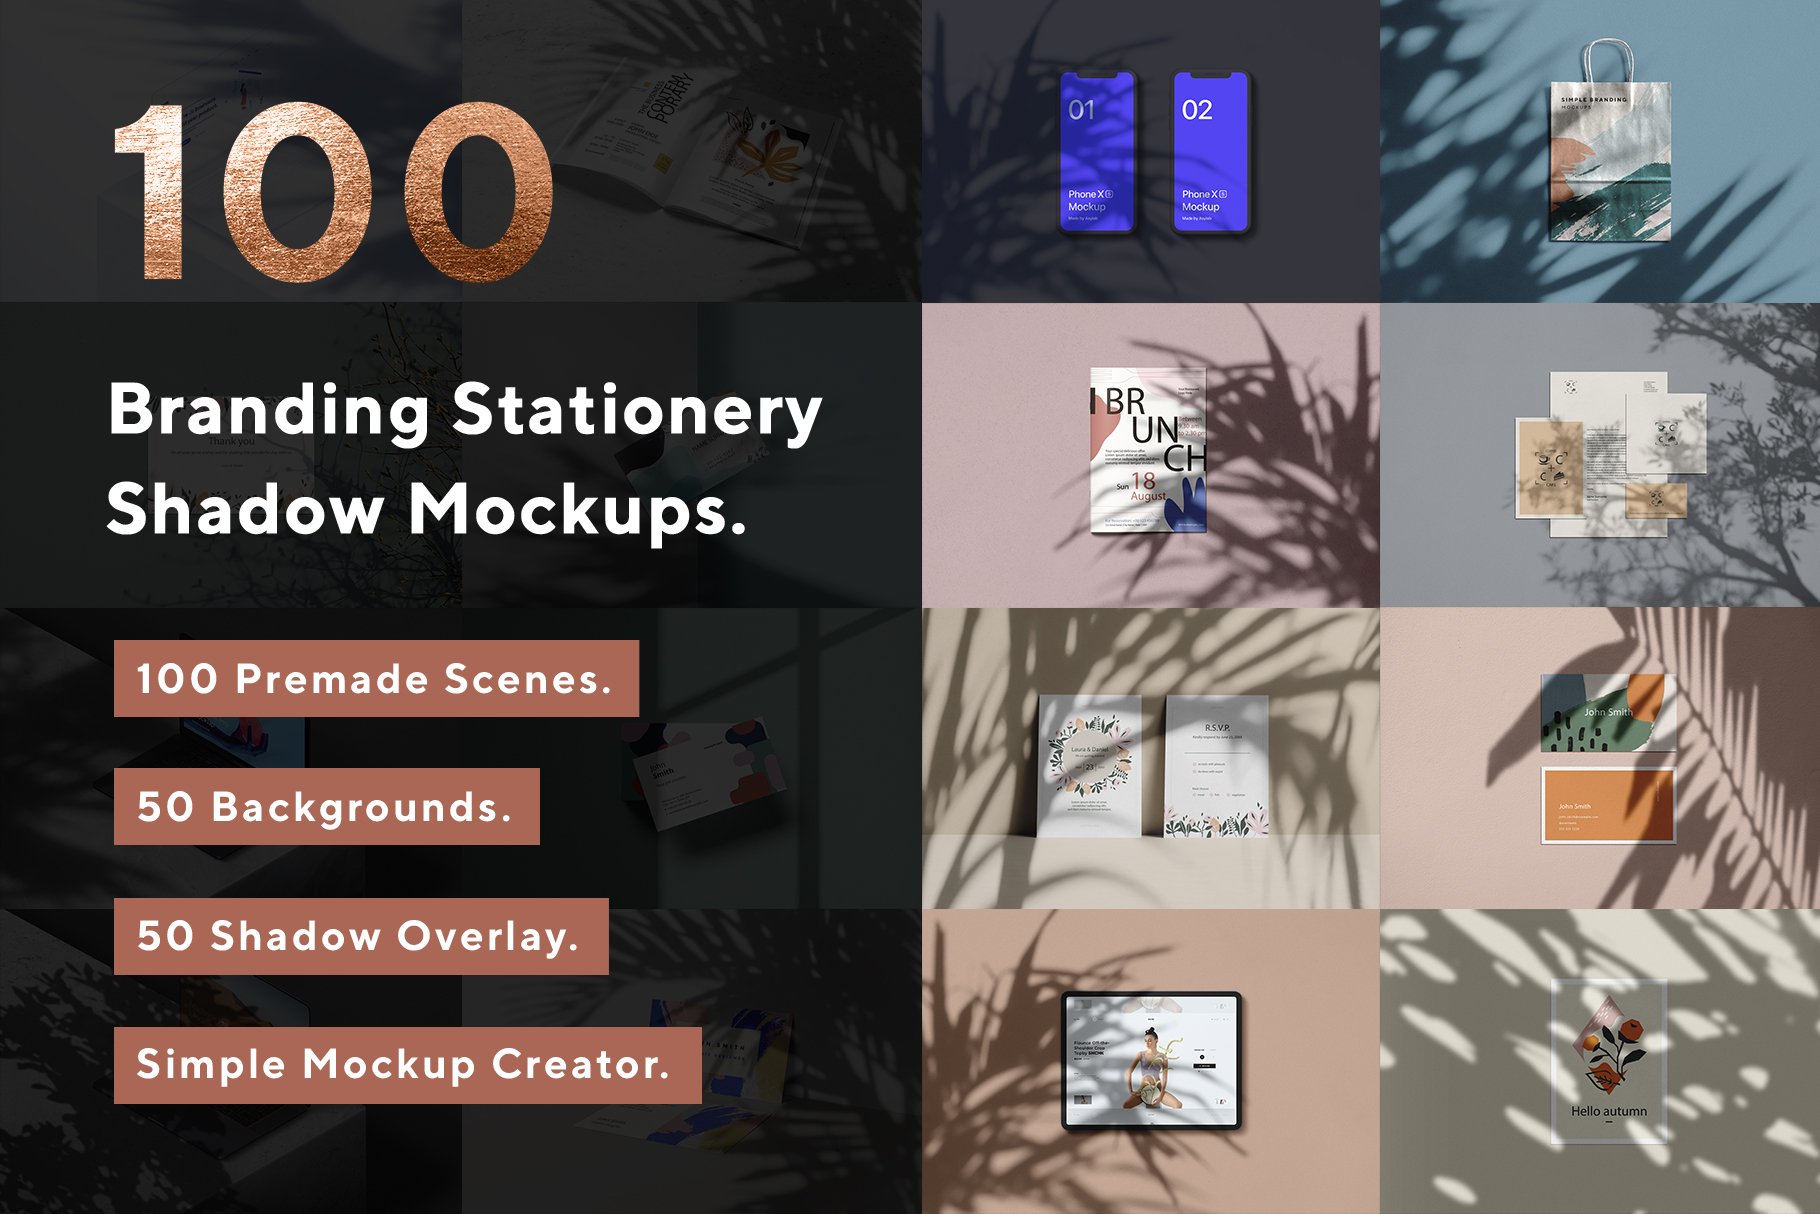 100 Branding Stationery Mockups cover image.